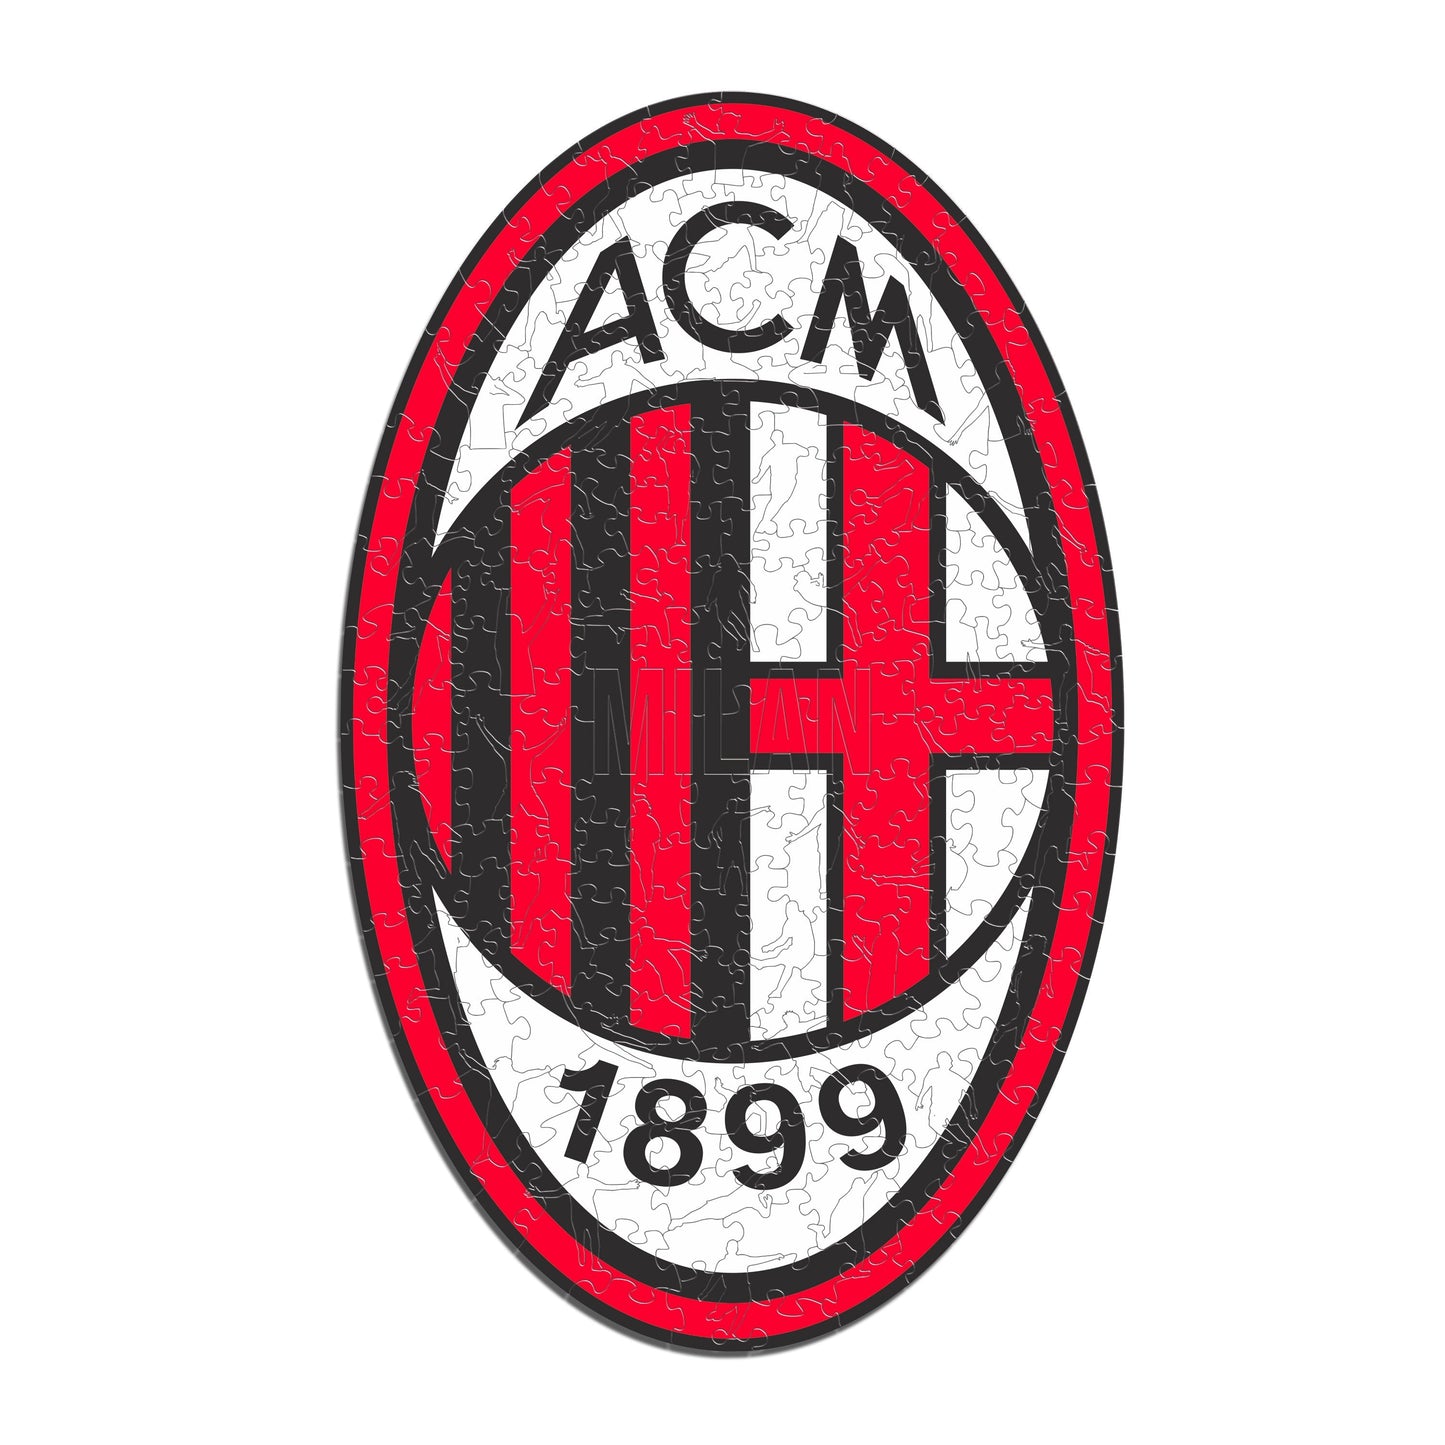 2 PACK AC Milan® Crest + Jersey